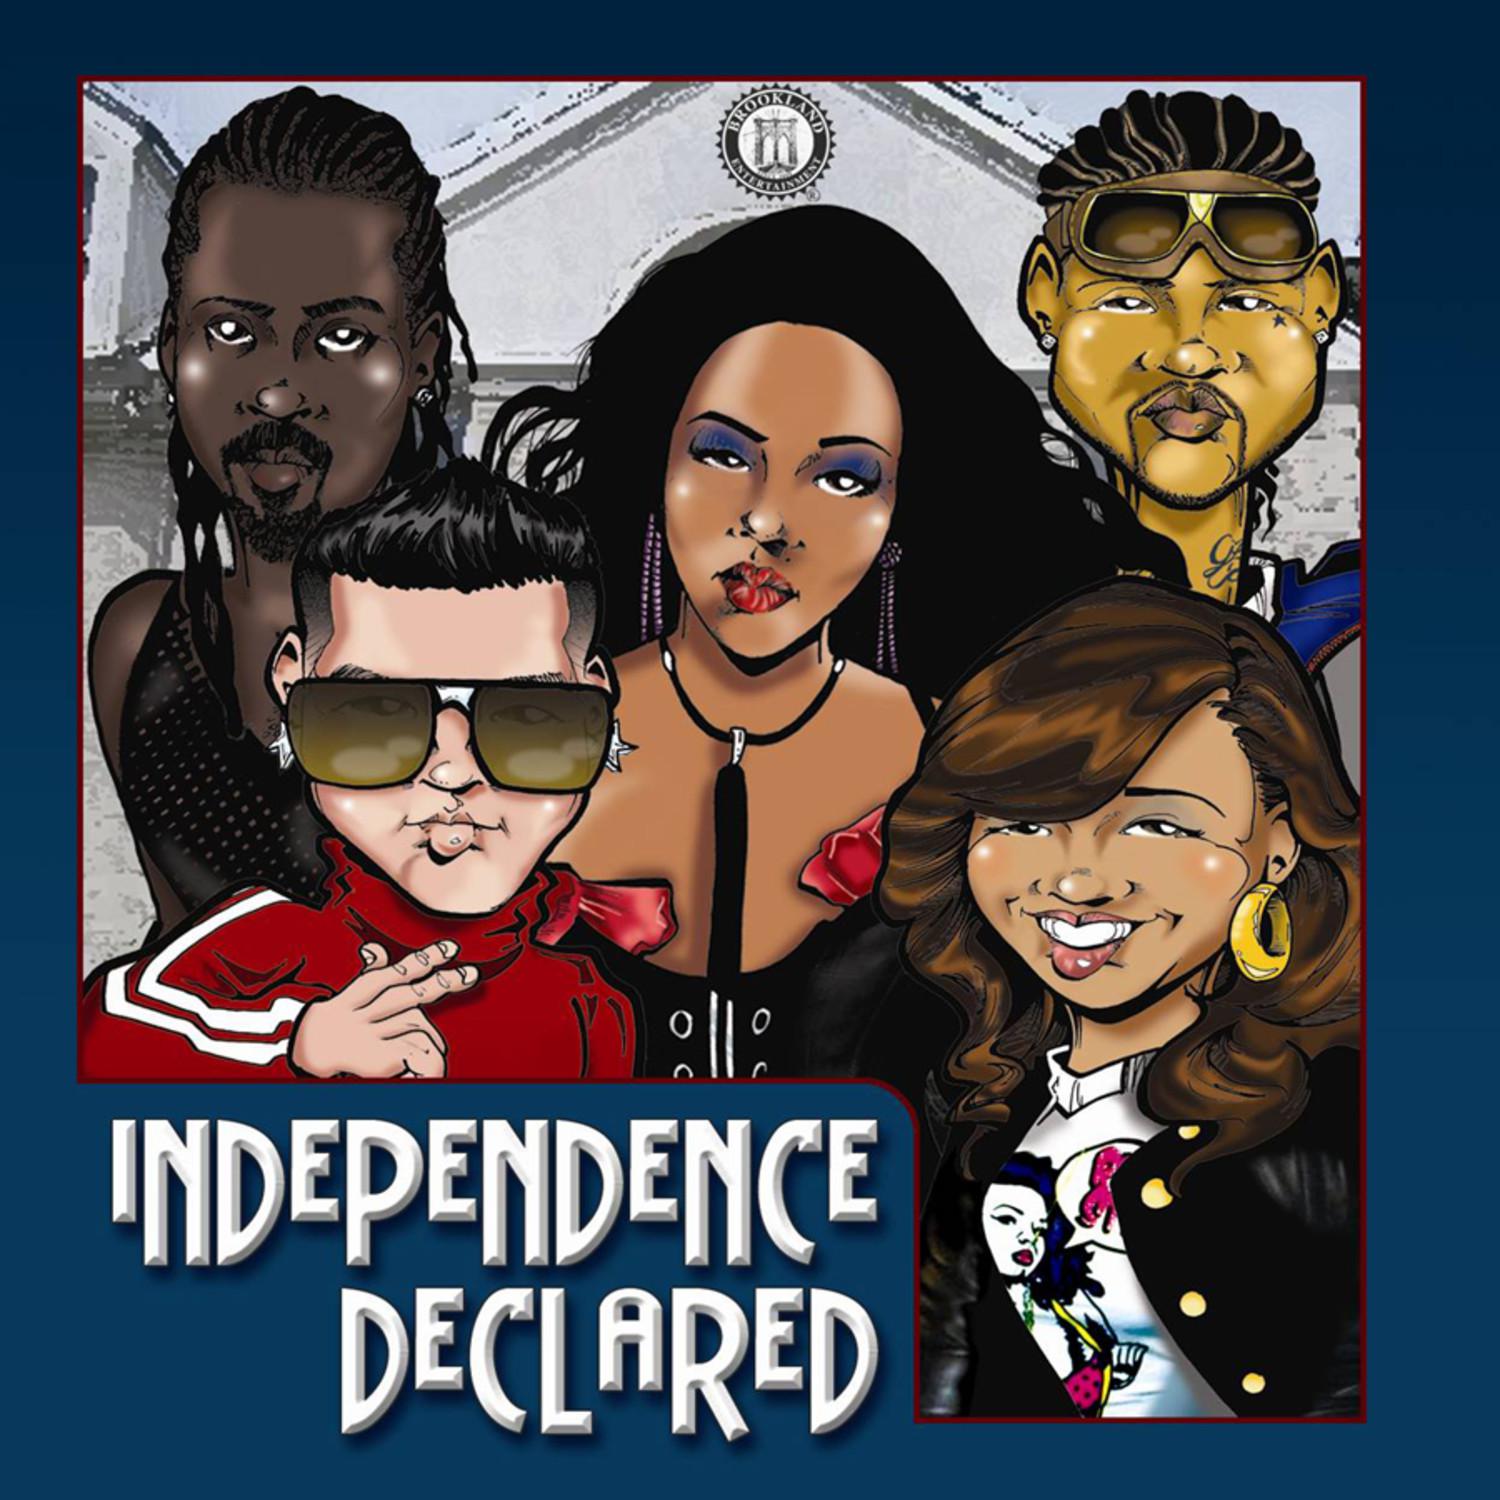 Independence Declared